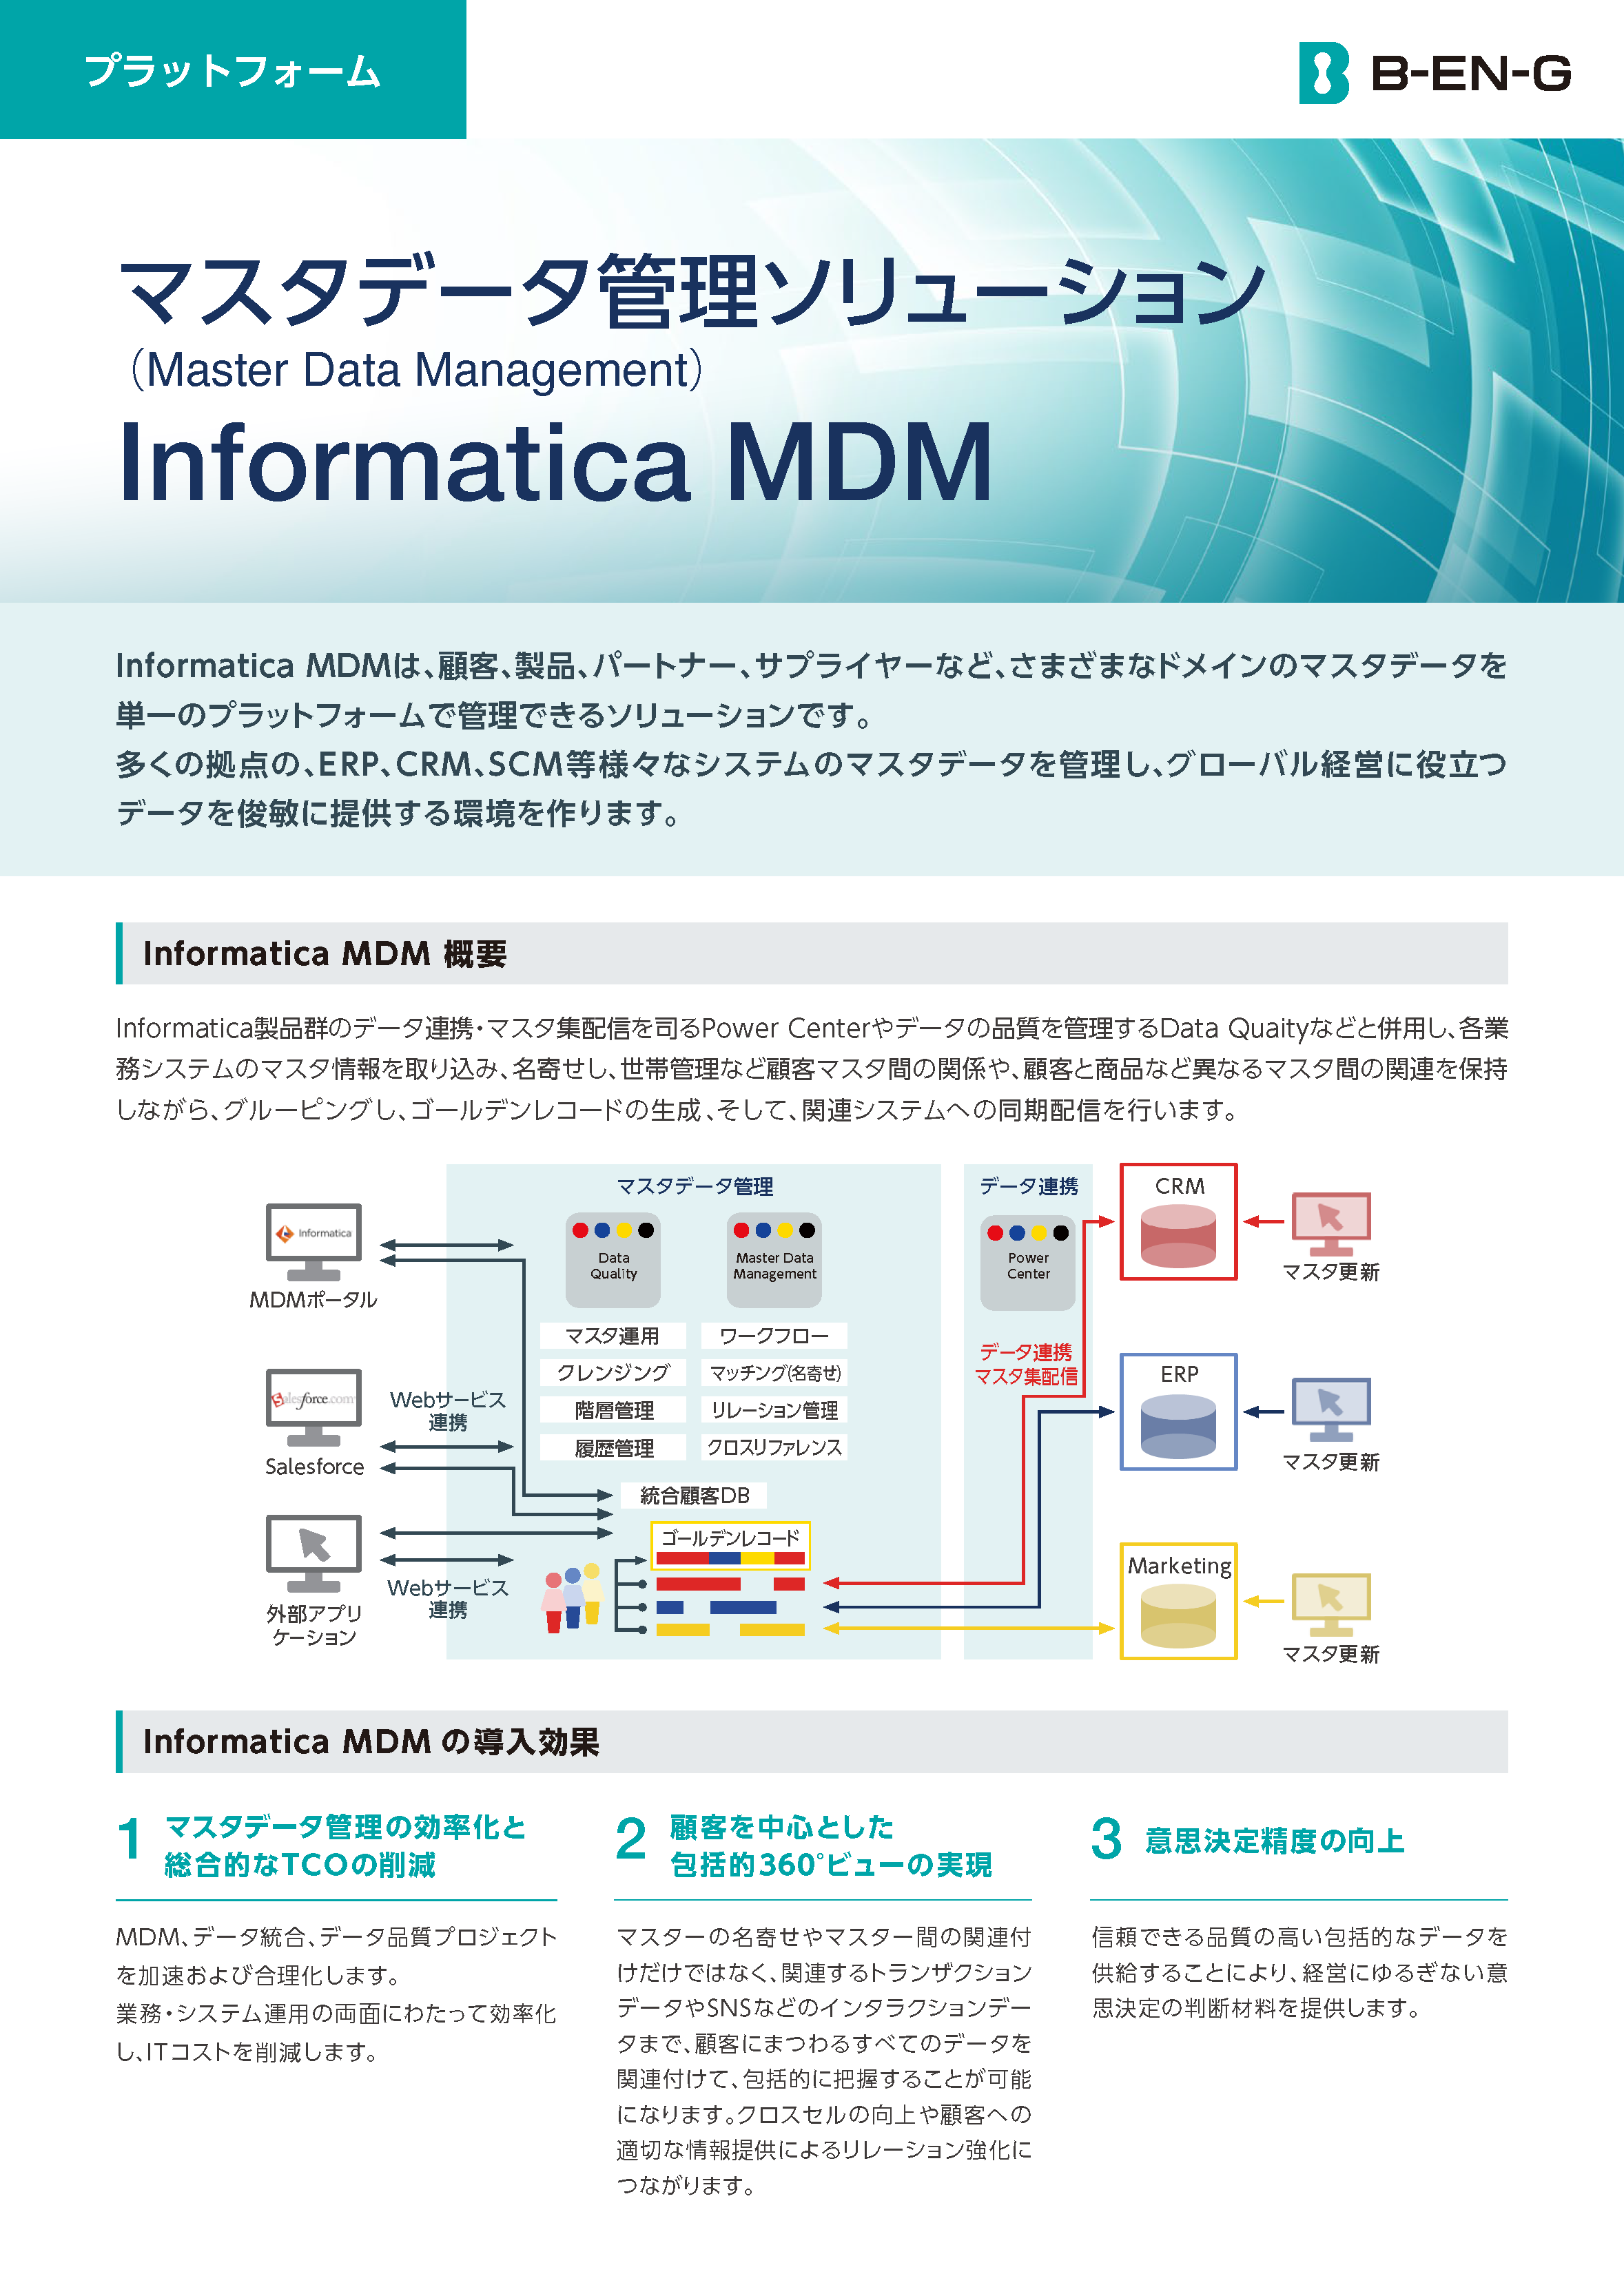 Informatica MDM